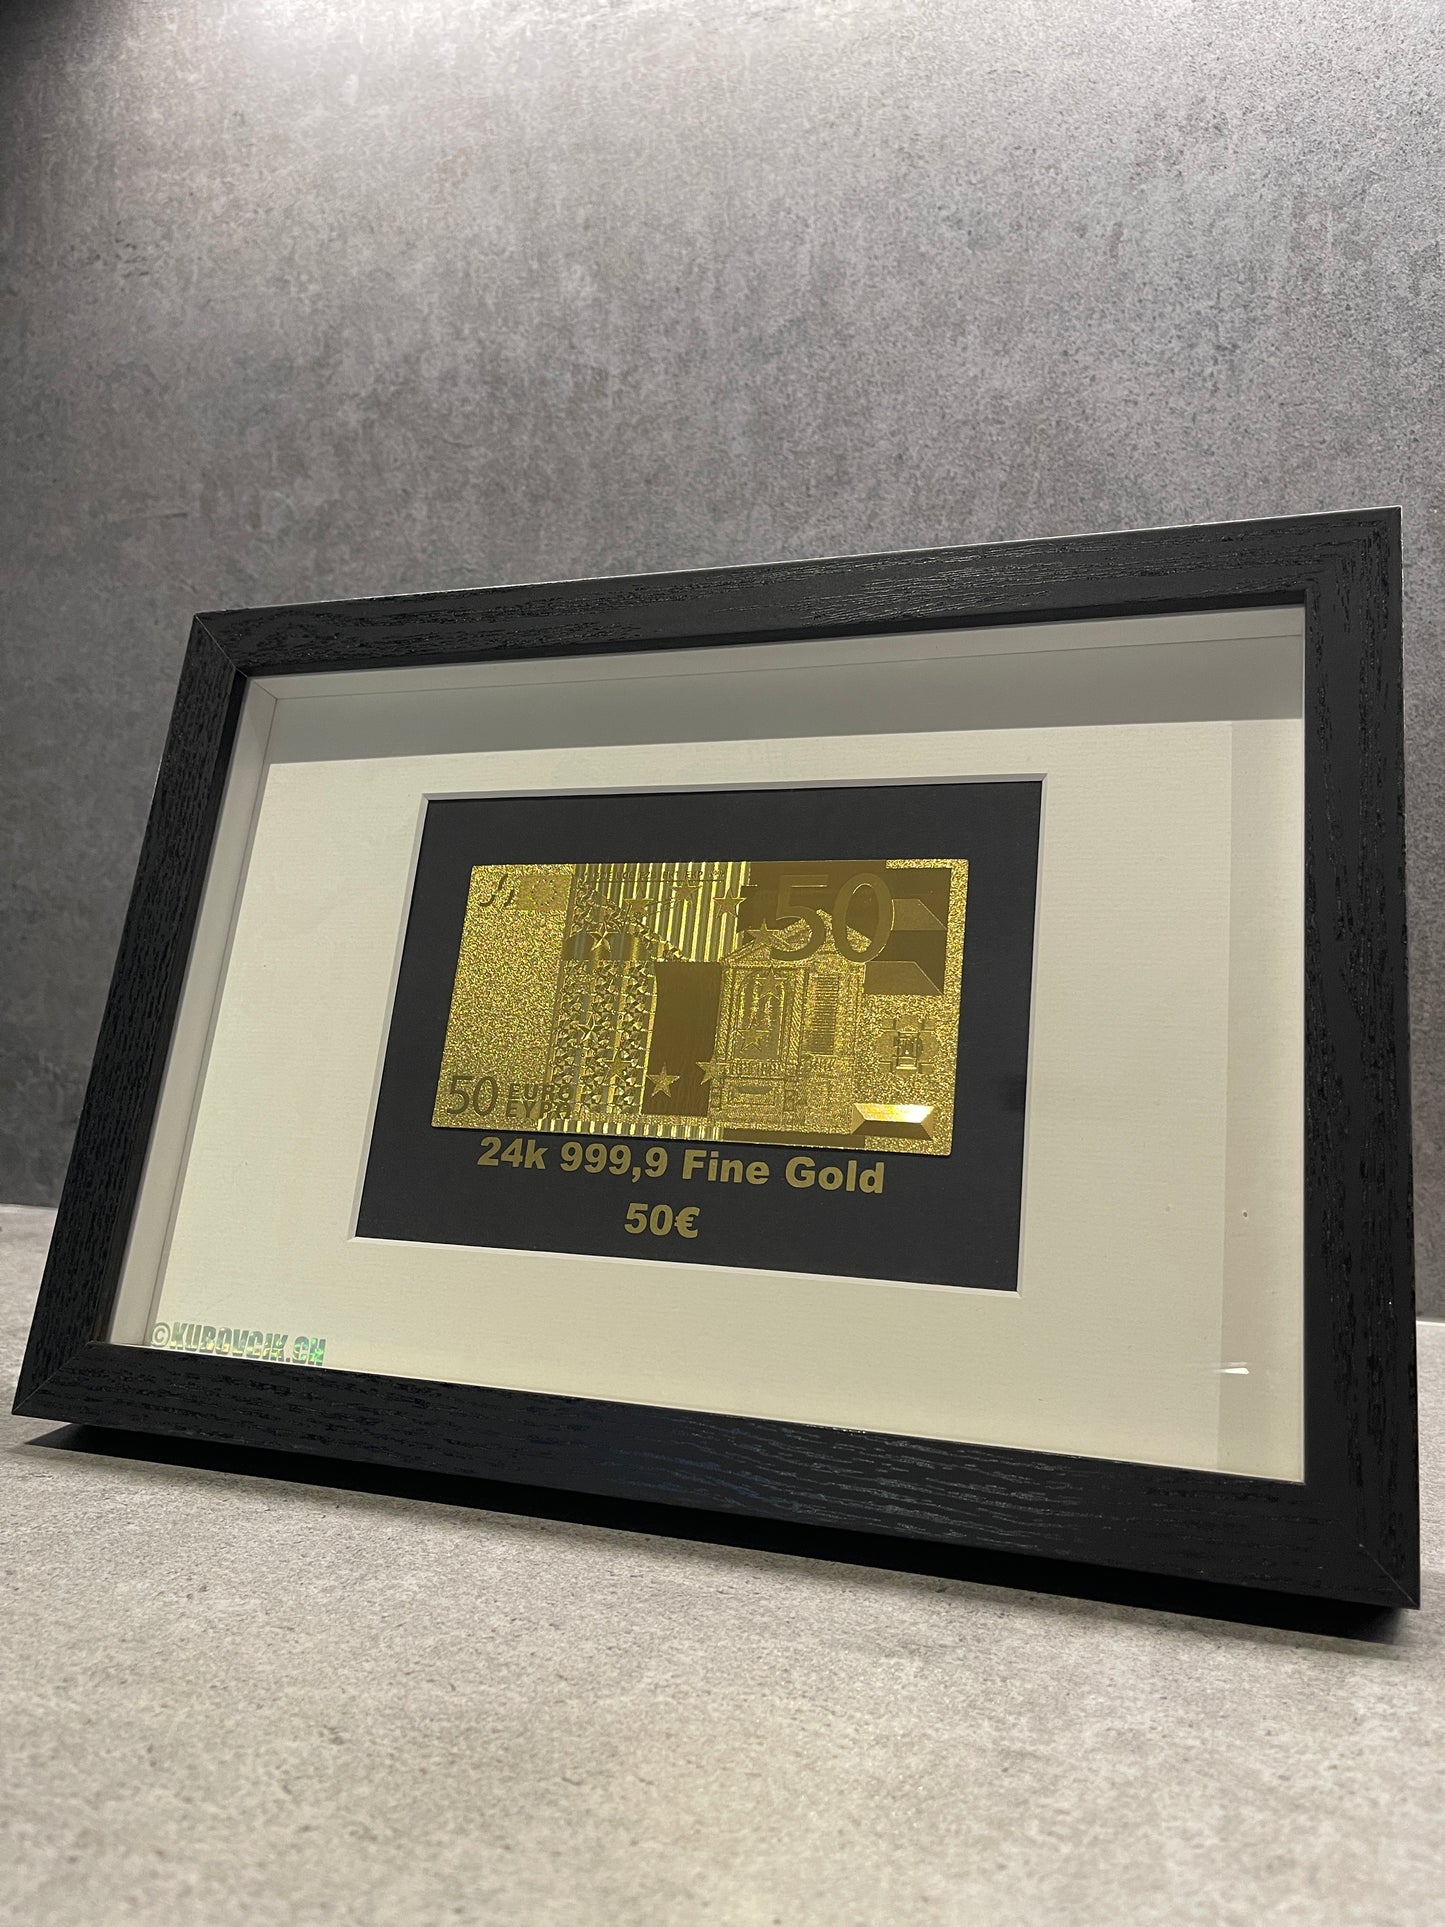 50€ 24k Gold Plated Frame